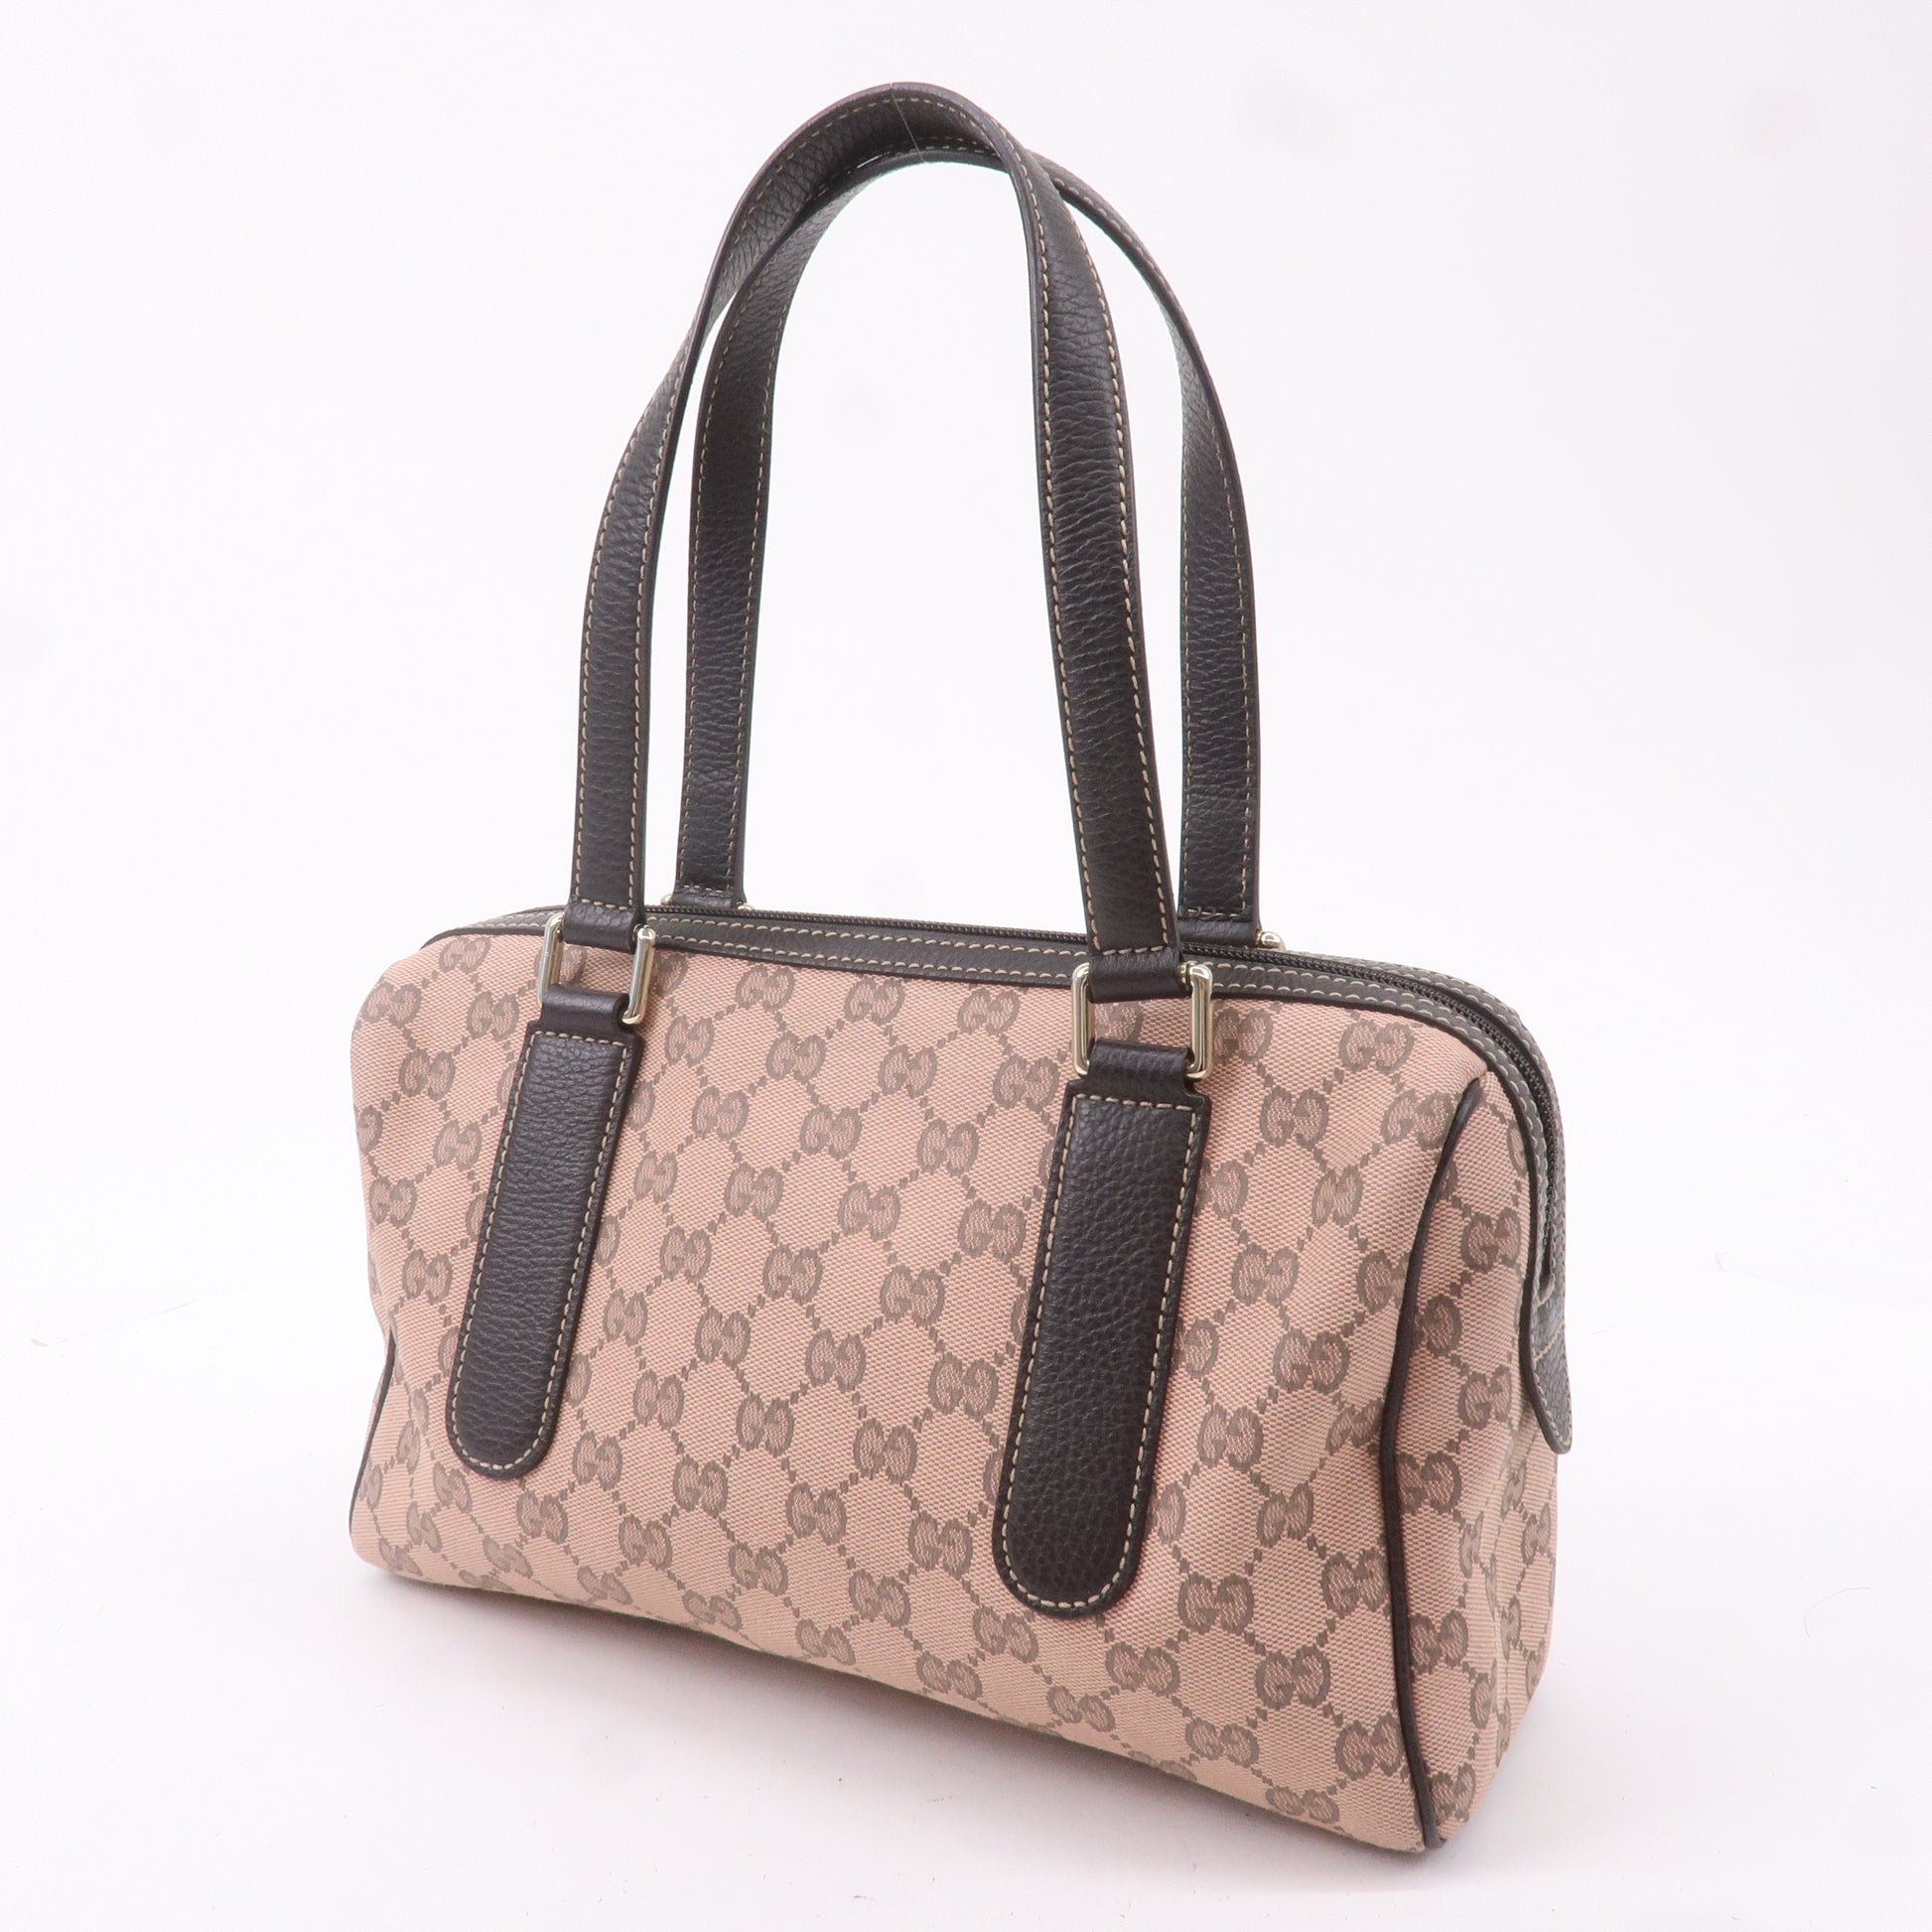 GUCCI-GG-Canvas-Leather-Boston-Bag-Hand-Bag-Pink-Dark-Brown-257289